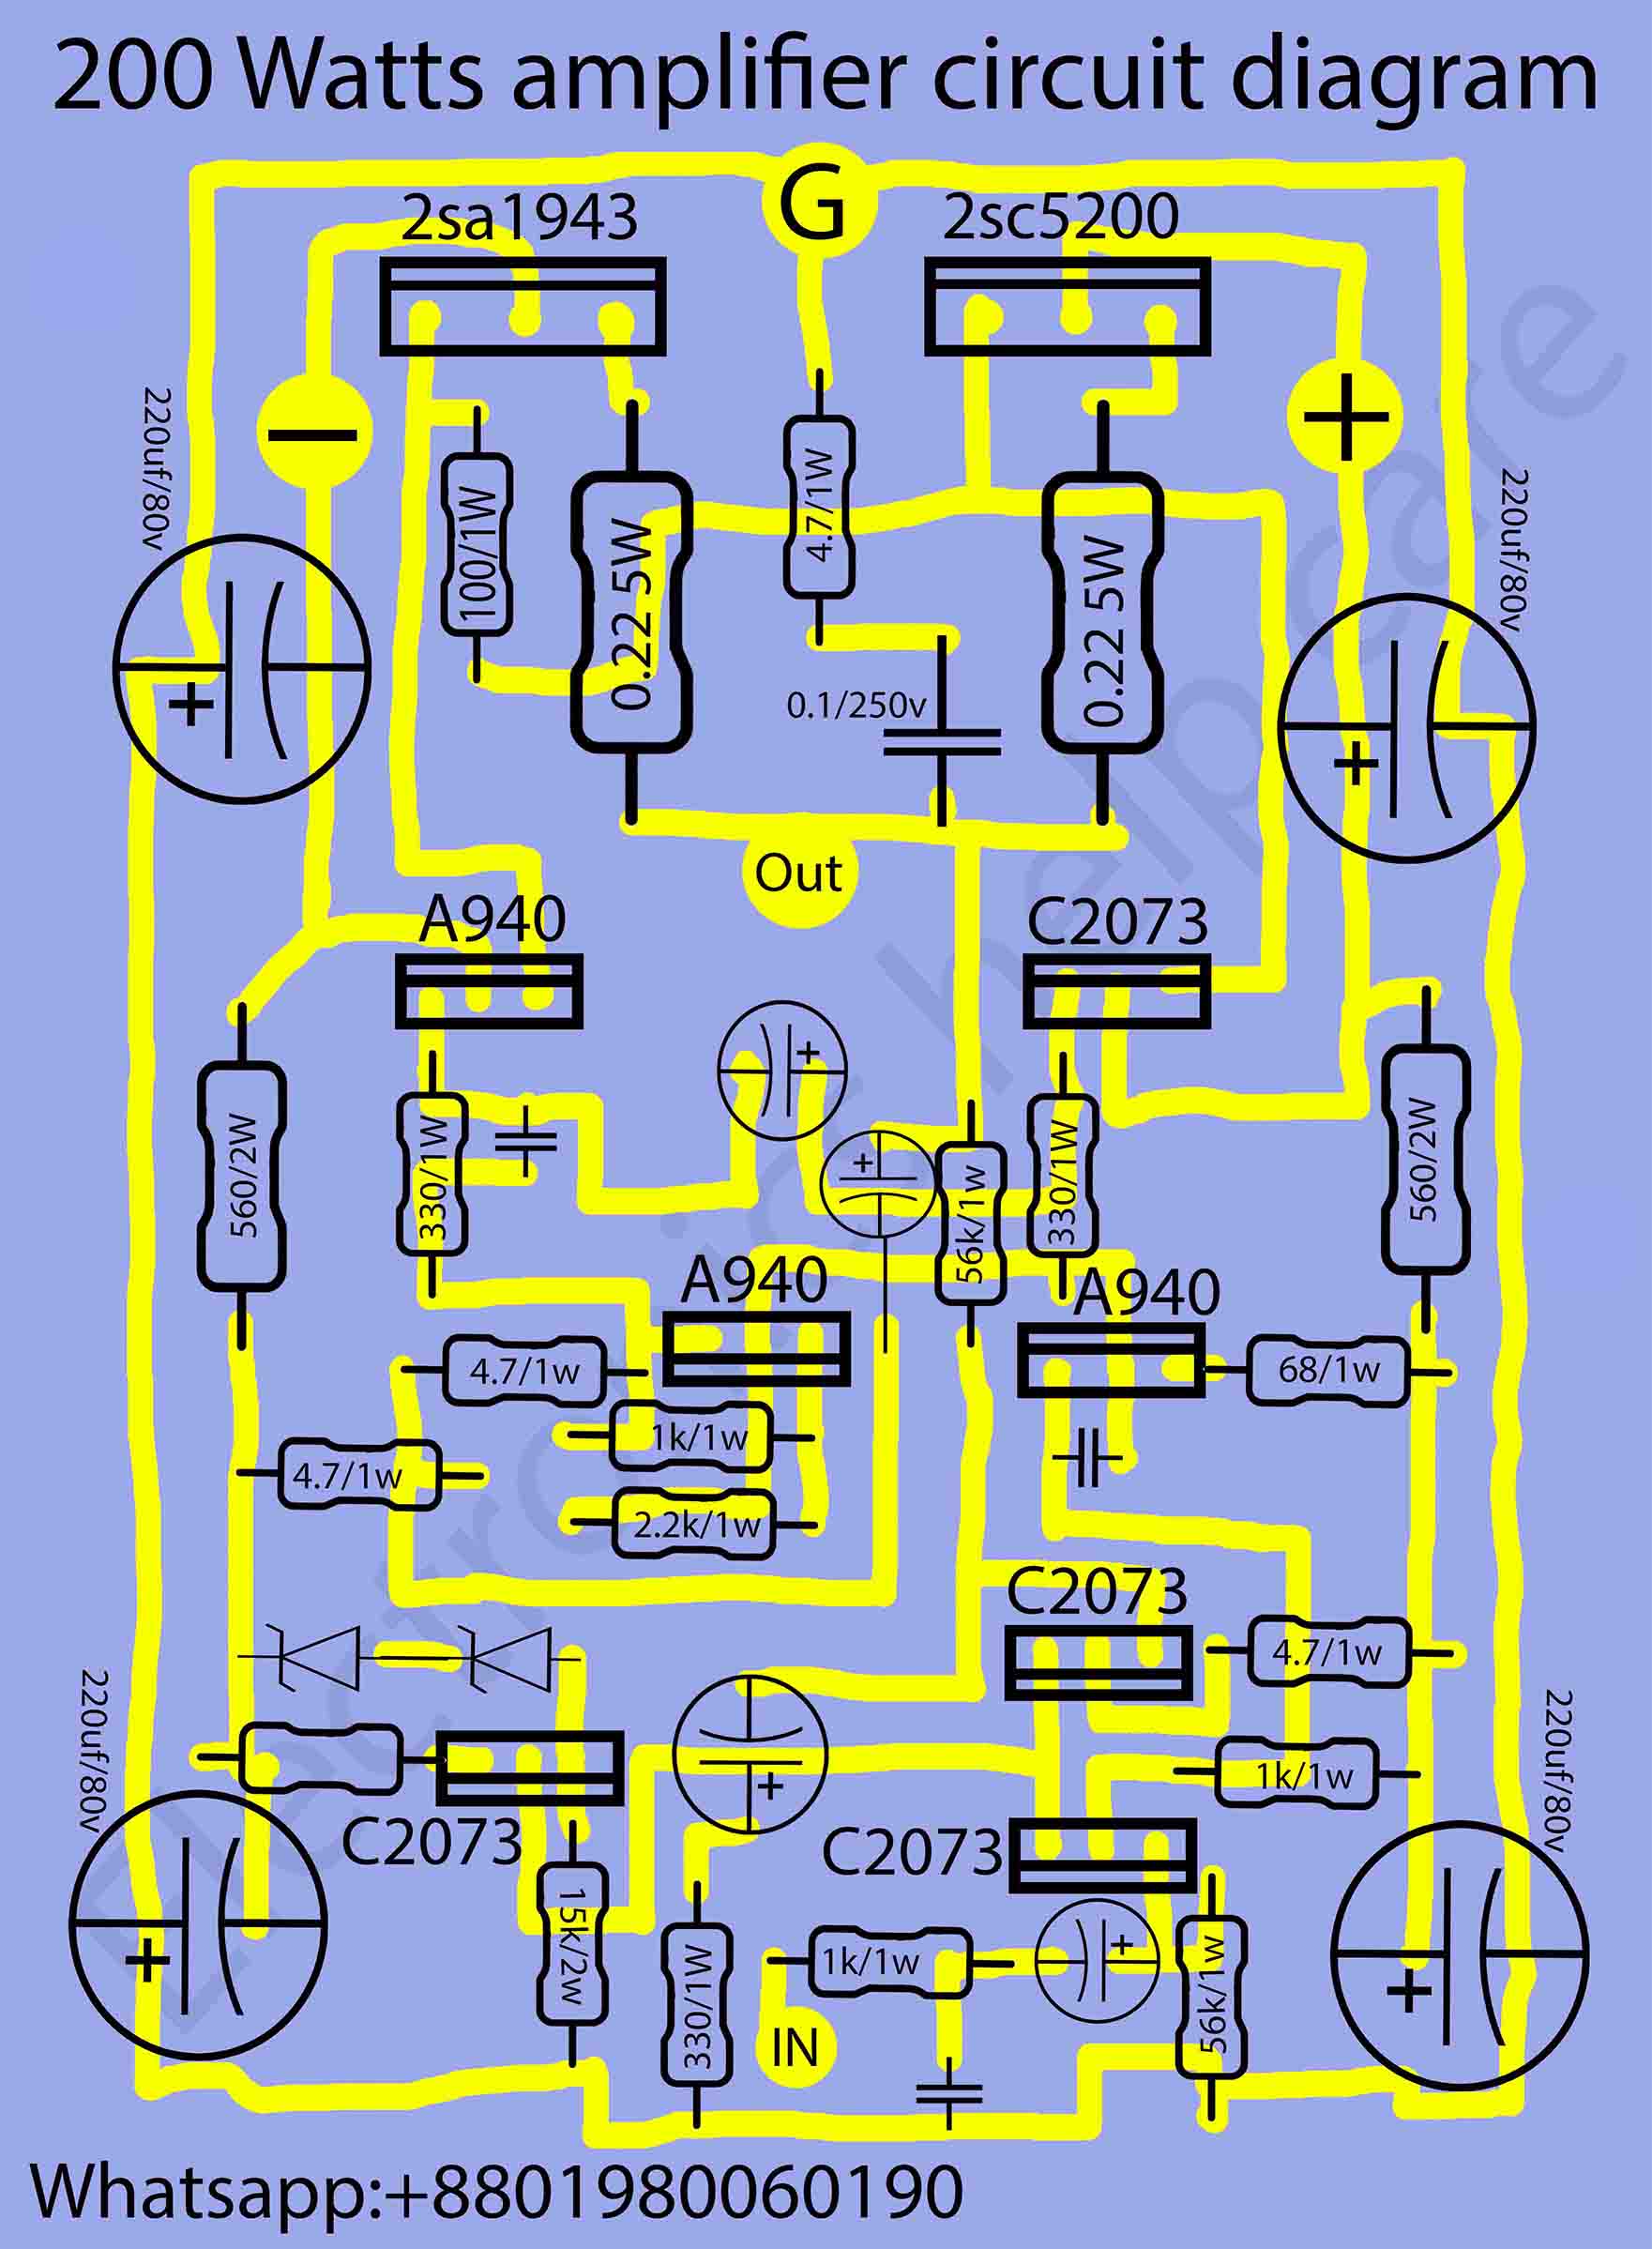 200 watts amplifier circuit